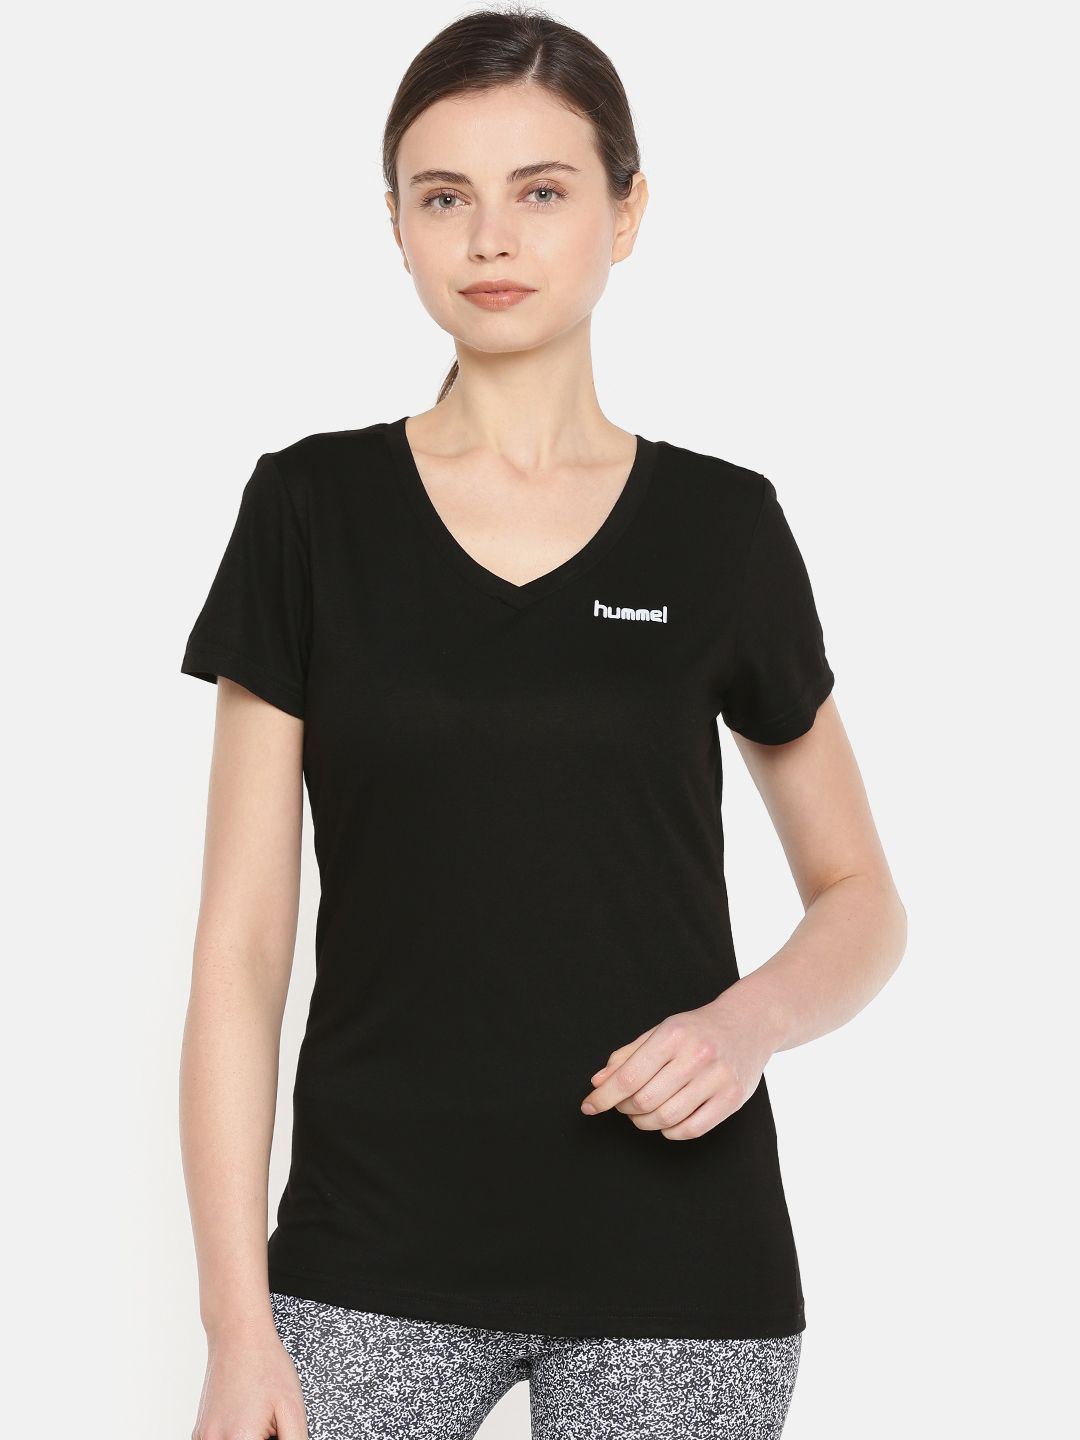 hummel Women Black Solid V-Neck ANGEN T-shirt Price in India